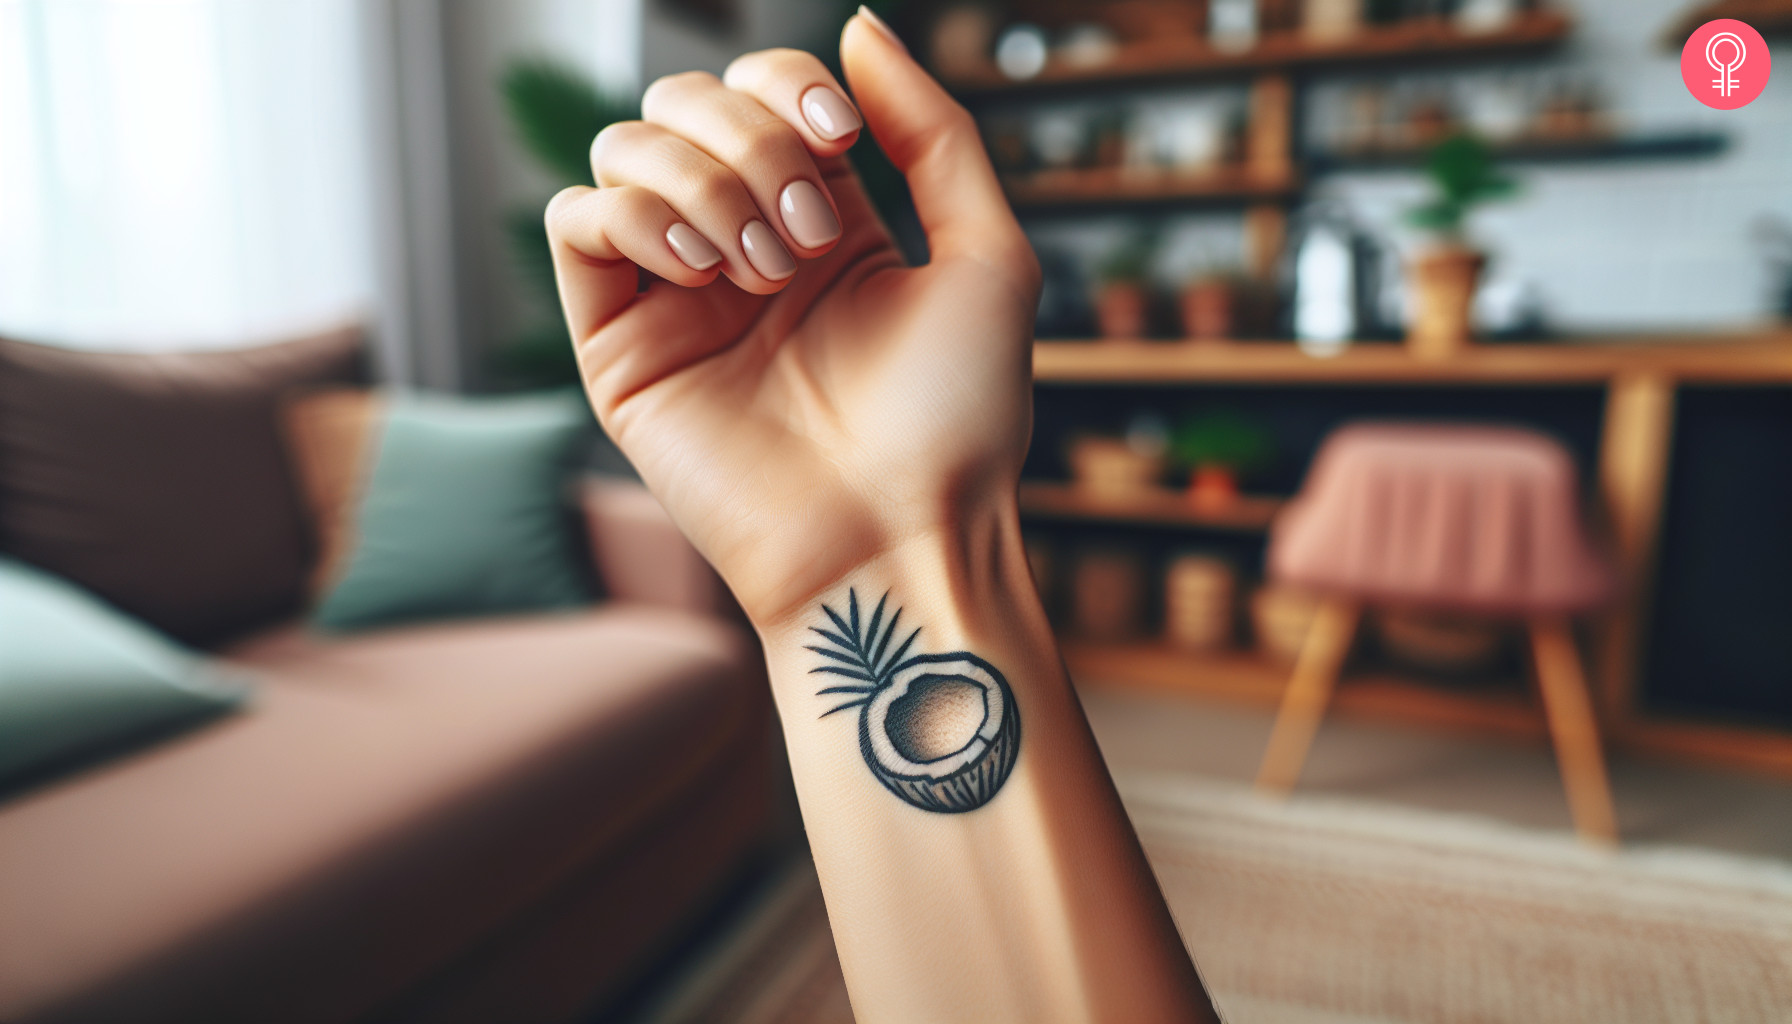 A small coconut tattoo on the wrist